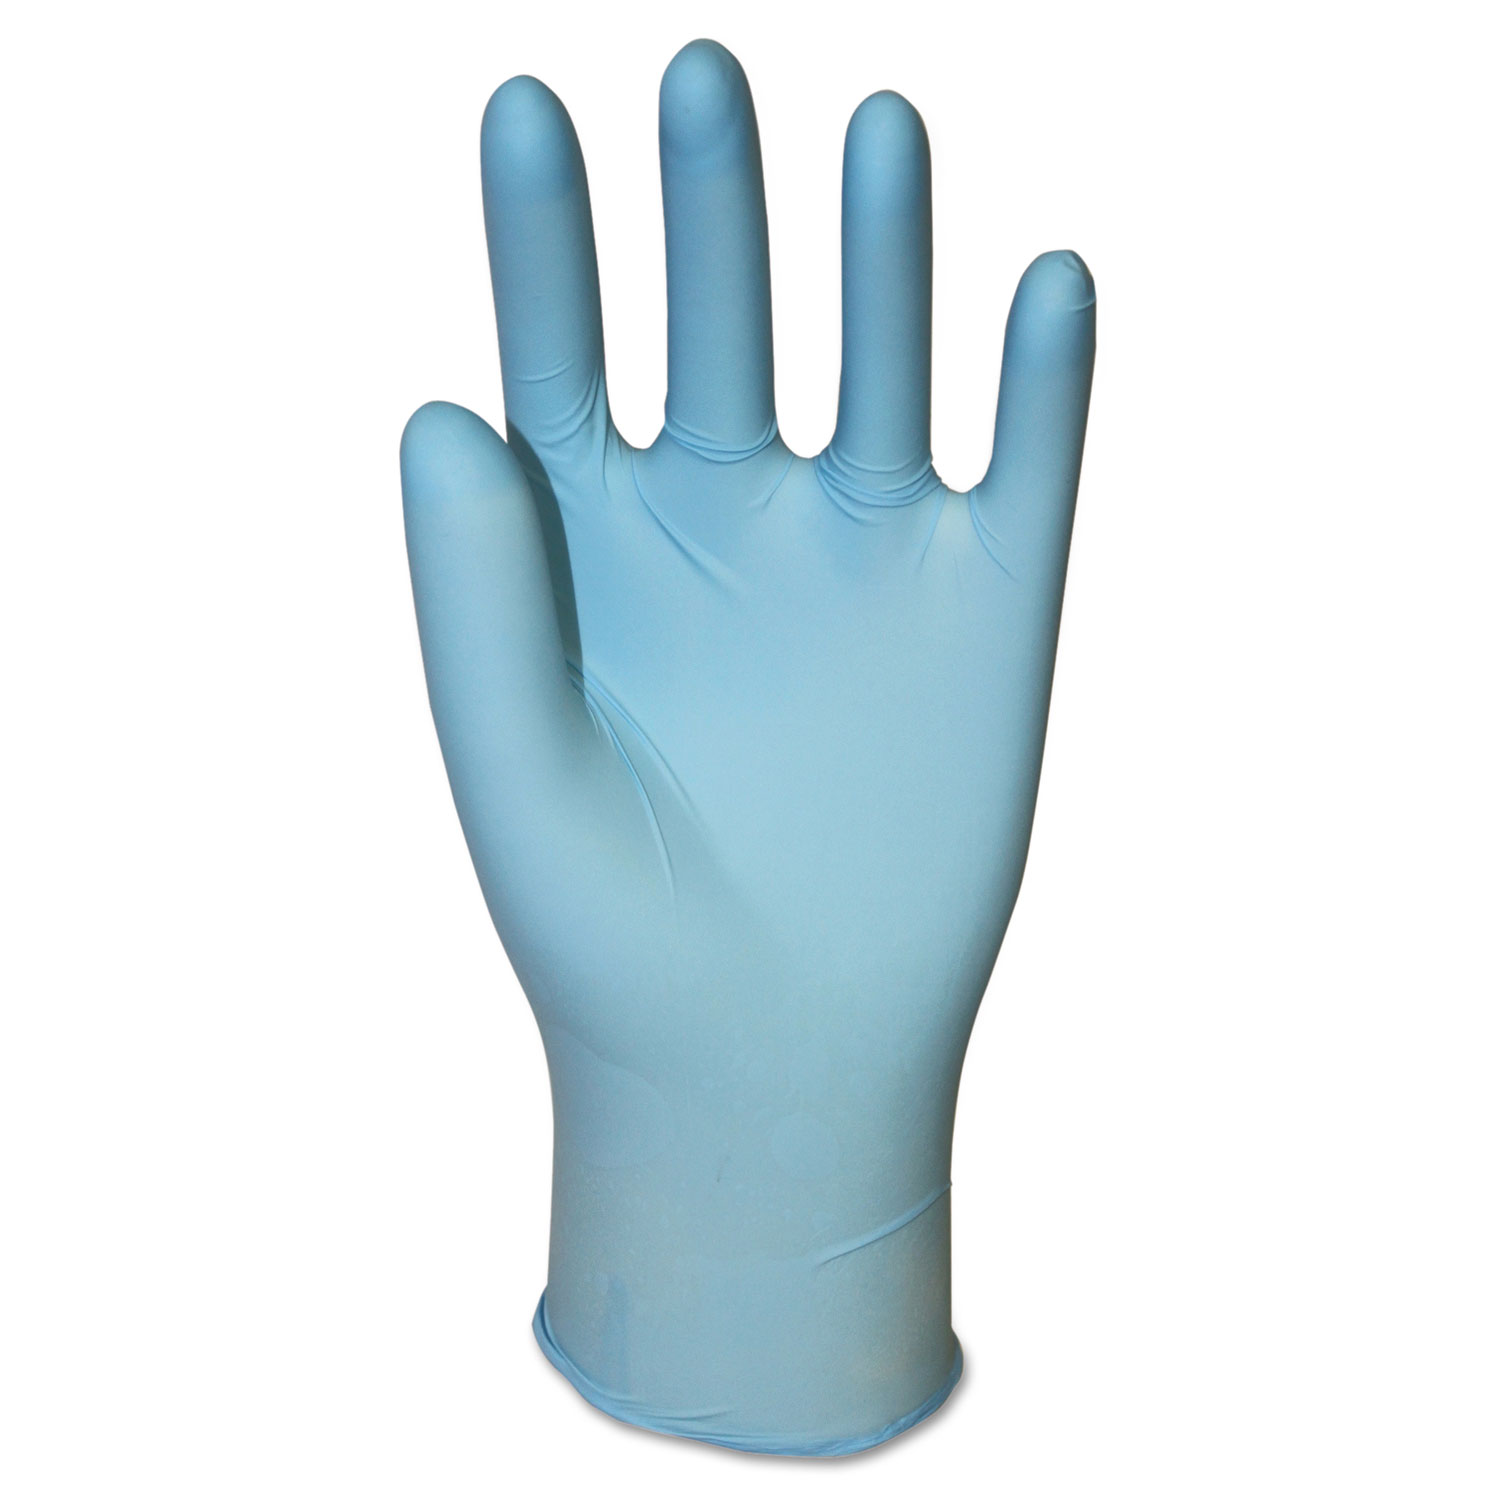  Impact 8644L Pro-Guard Disposable Powder-Free General-Purpose Nitrile Gloves, Blue, Large, 100/Box, 10 Boxes/Carton (IMP8644L) 